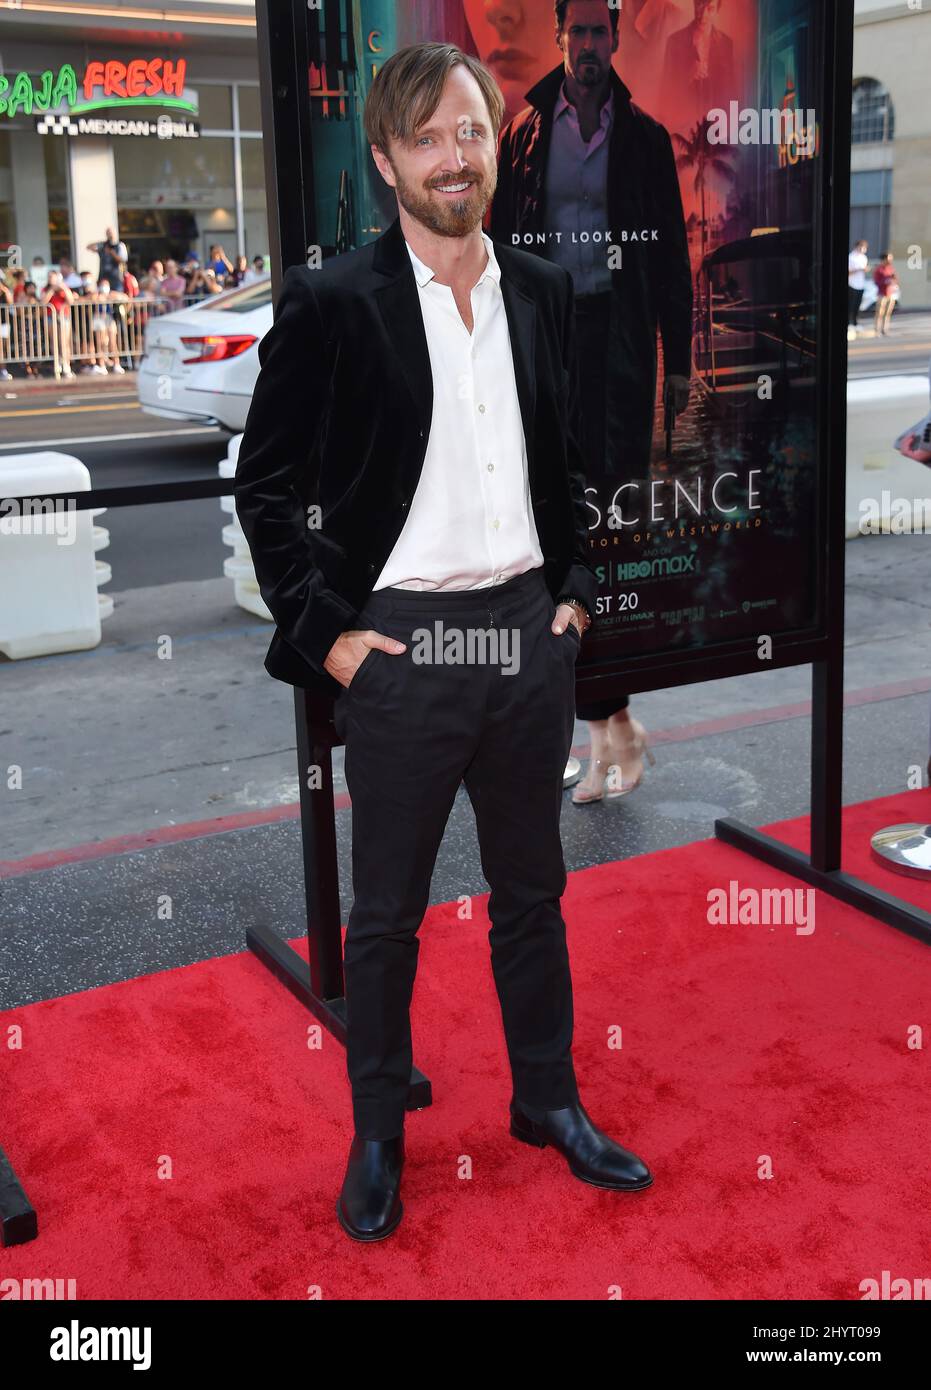 Aaron Paul bei der Premiere von „Reminiscence“ in Los Angeles am 17. August 2021 in Hollywood, CA. Stockfoto